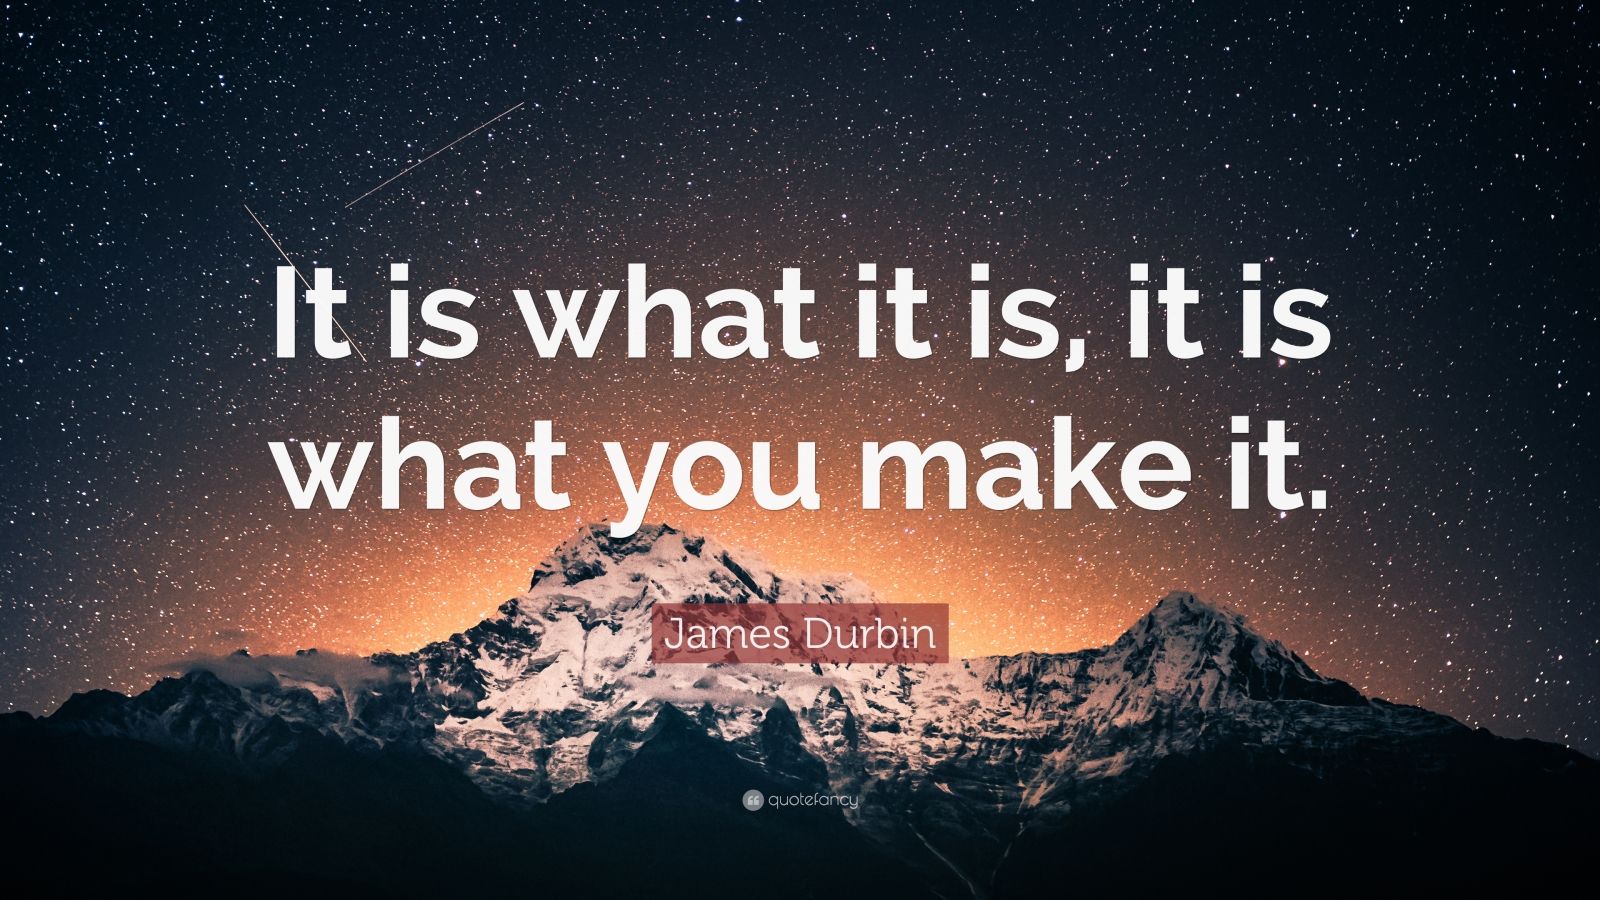 James Durbin - It is what it is, it is what you make it.